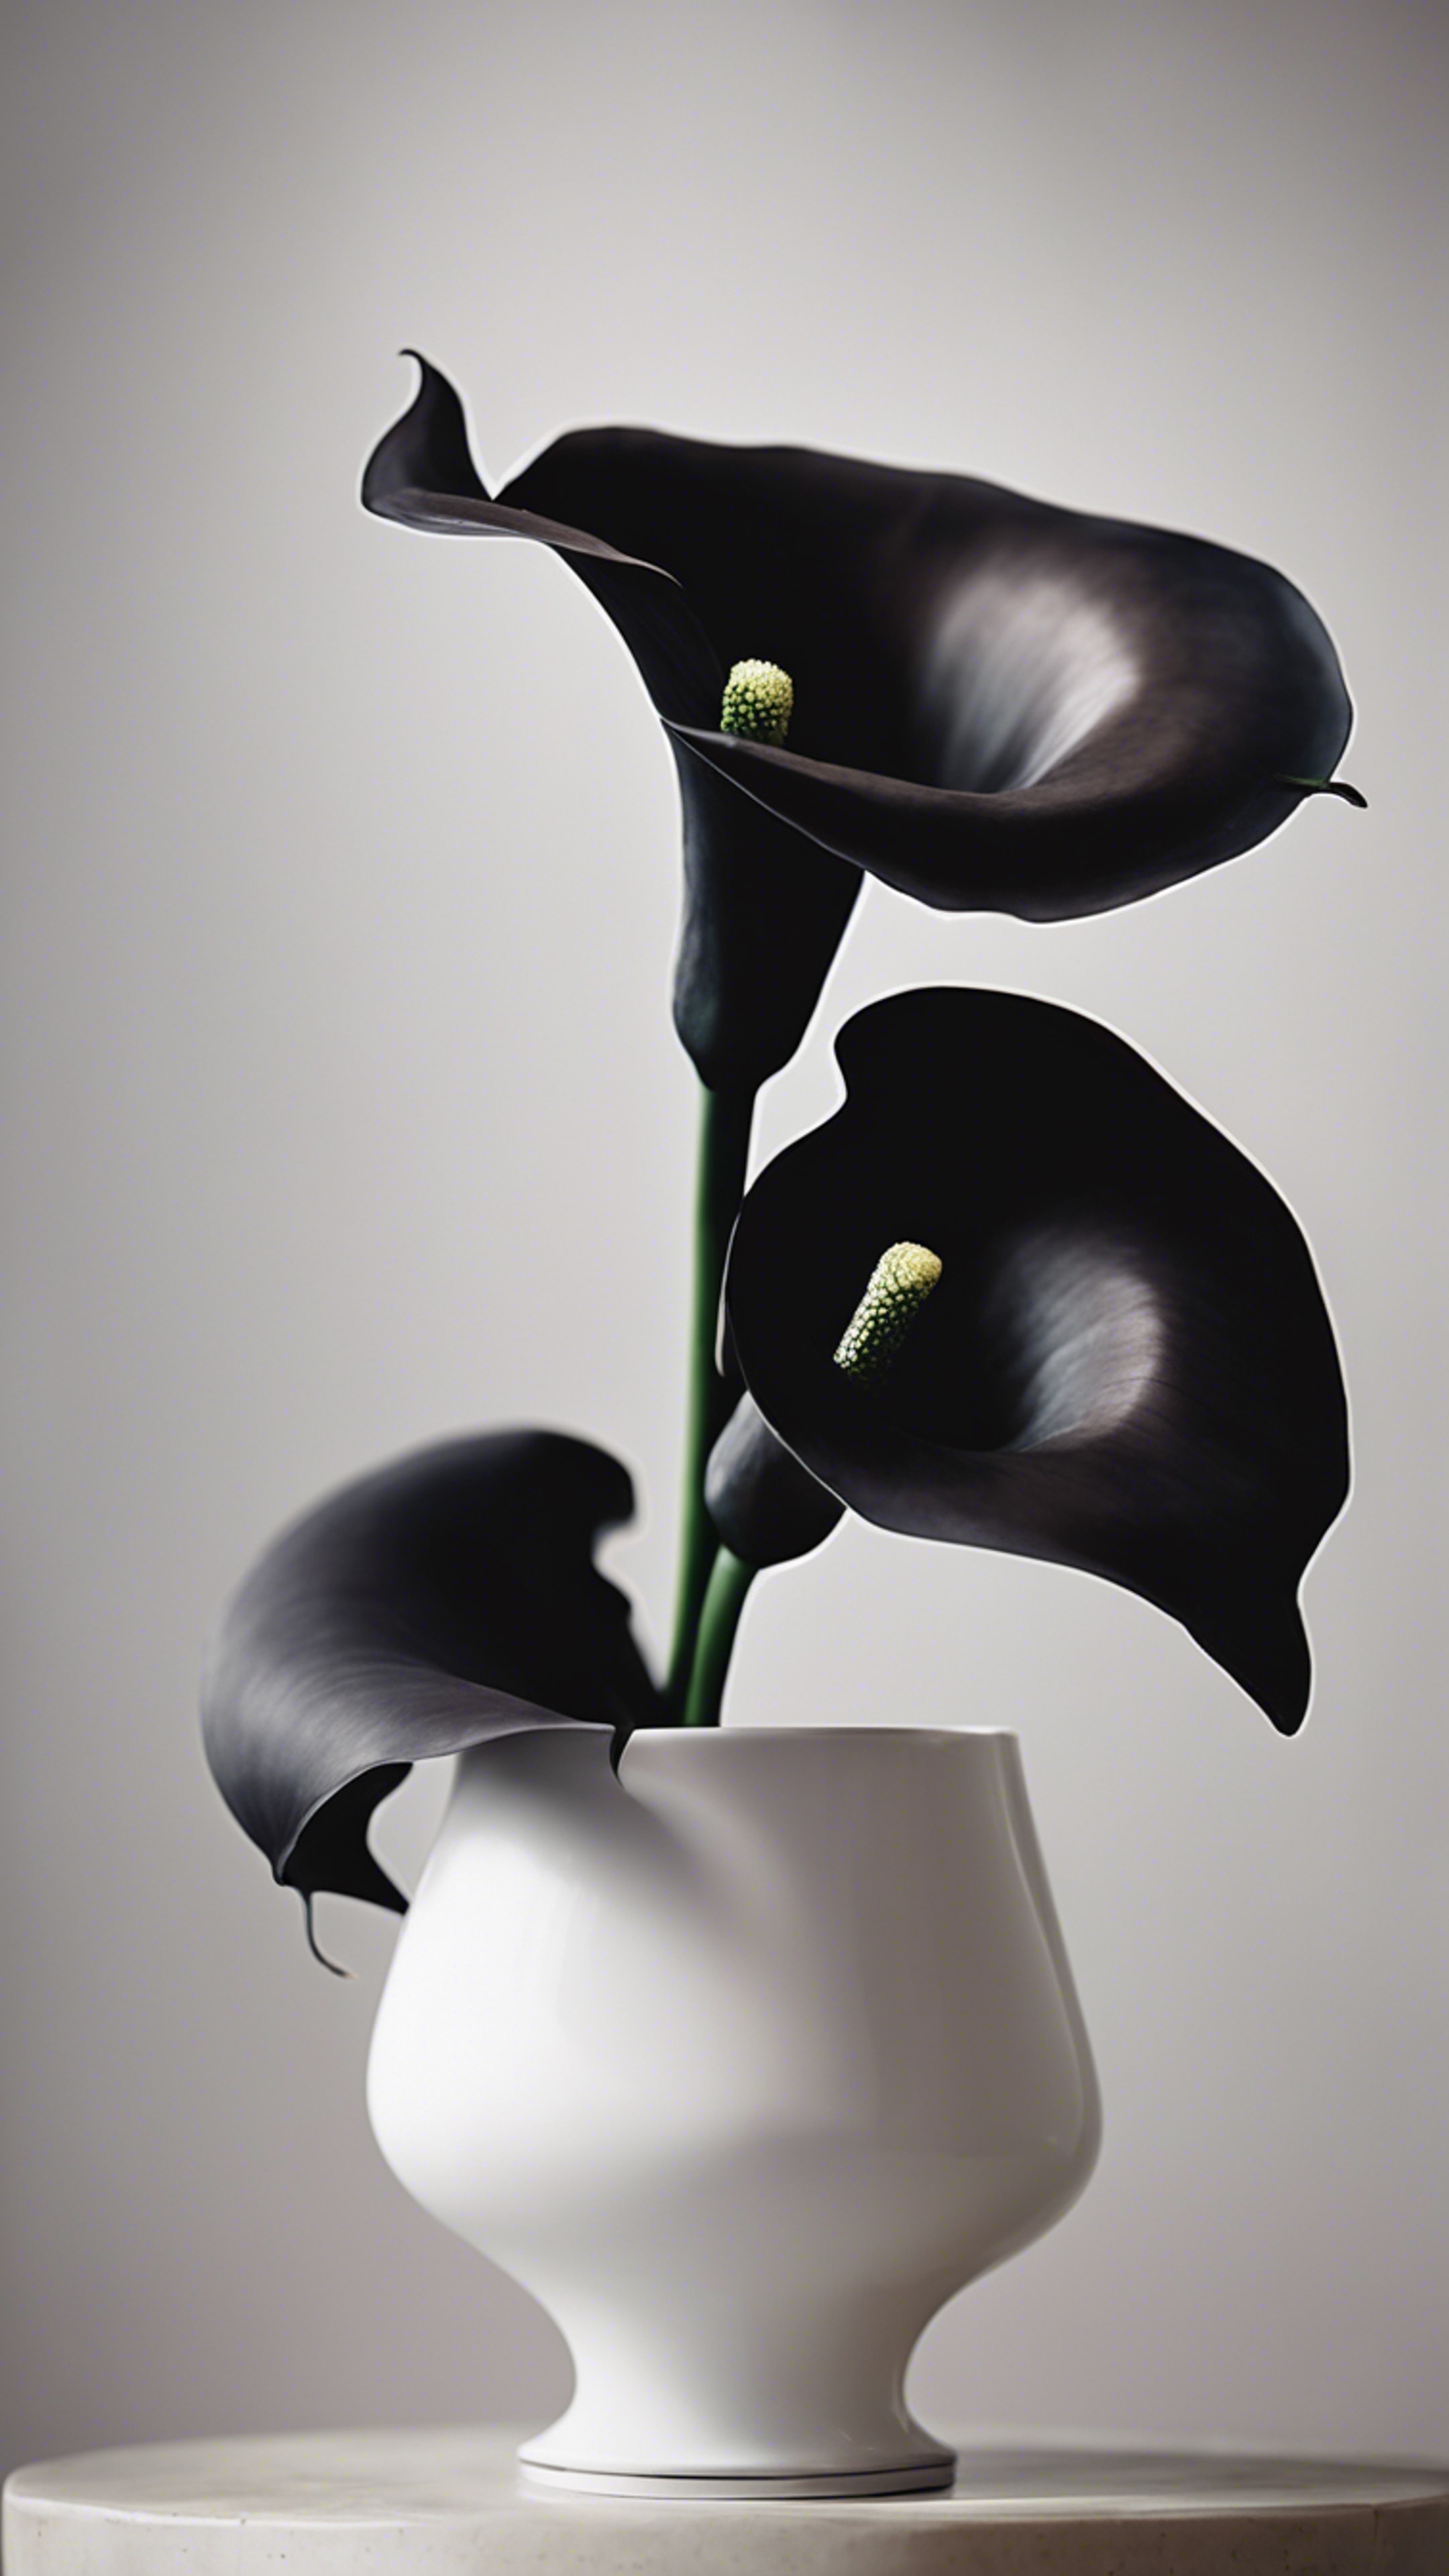 A breathtaking centerpiece featuring a black calla lily in a modern white vase. Wallpaper[9d5d01b6790e4db4a8d5]